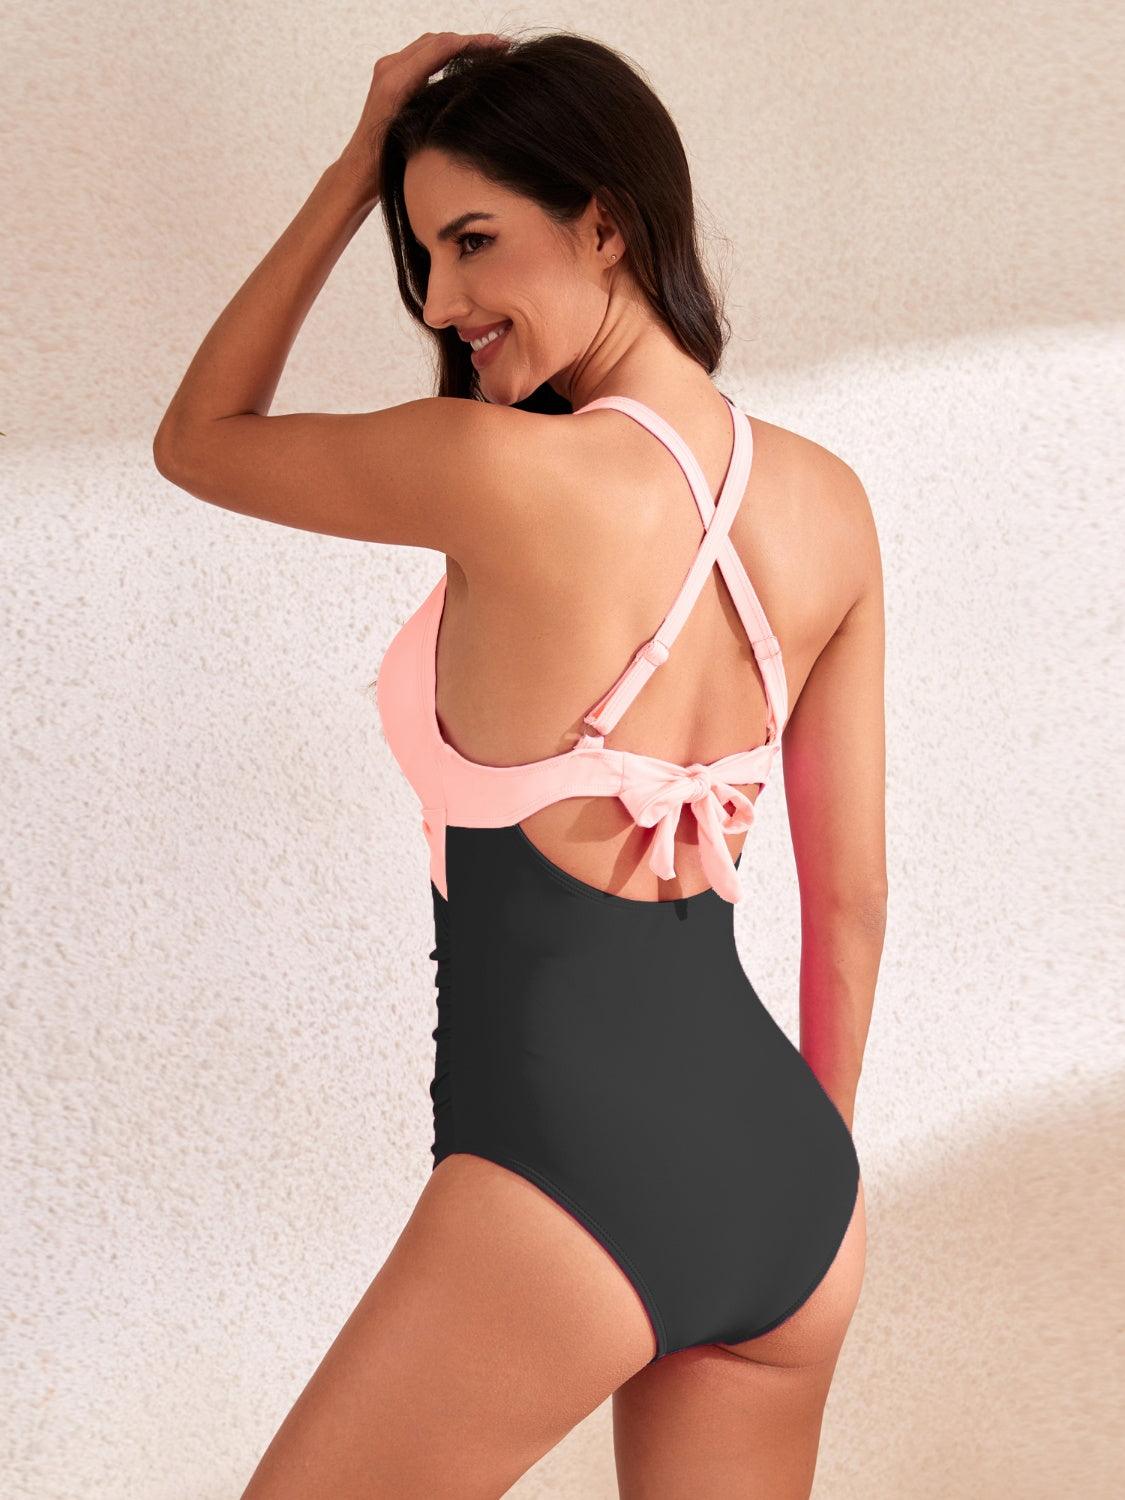 Bona Fide Fashion - Crisscross Cutout V-Neck One-Piece Swimwear - Women Fashion - Bona Fide Fashion